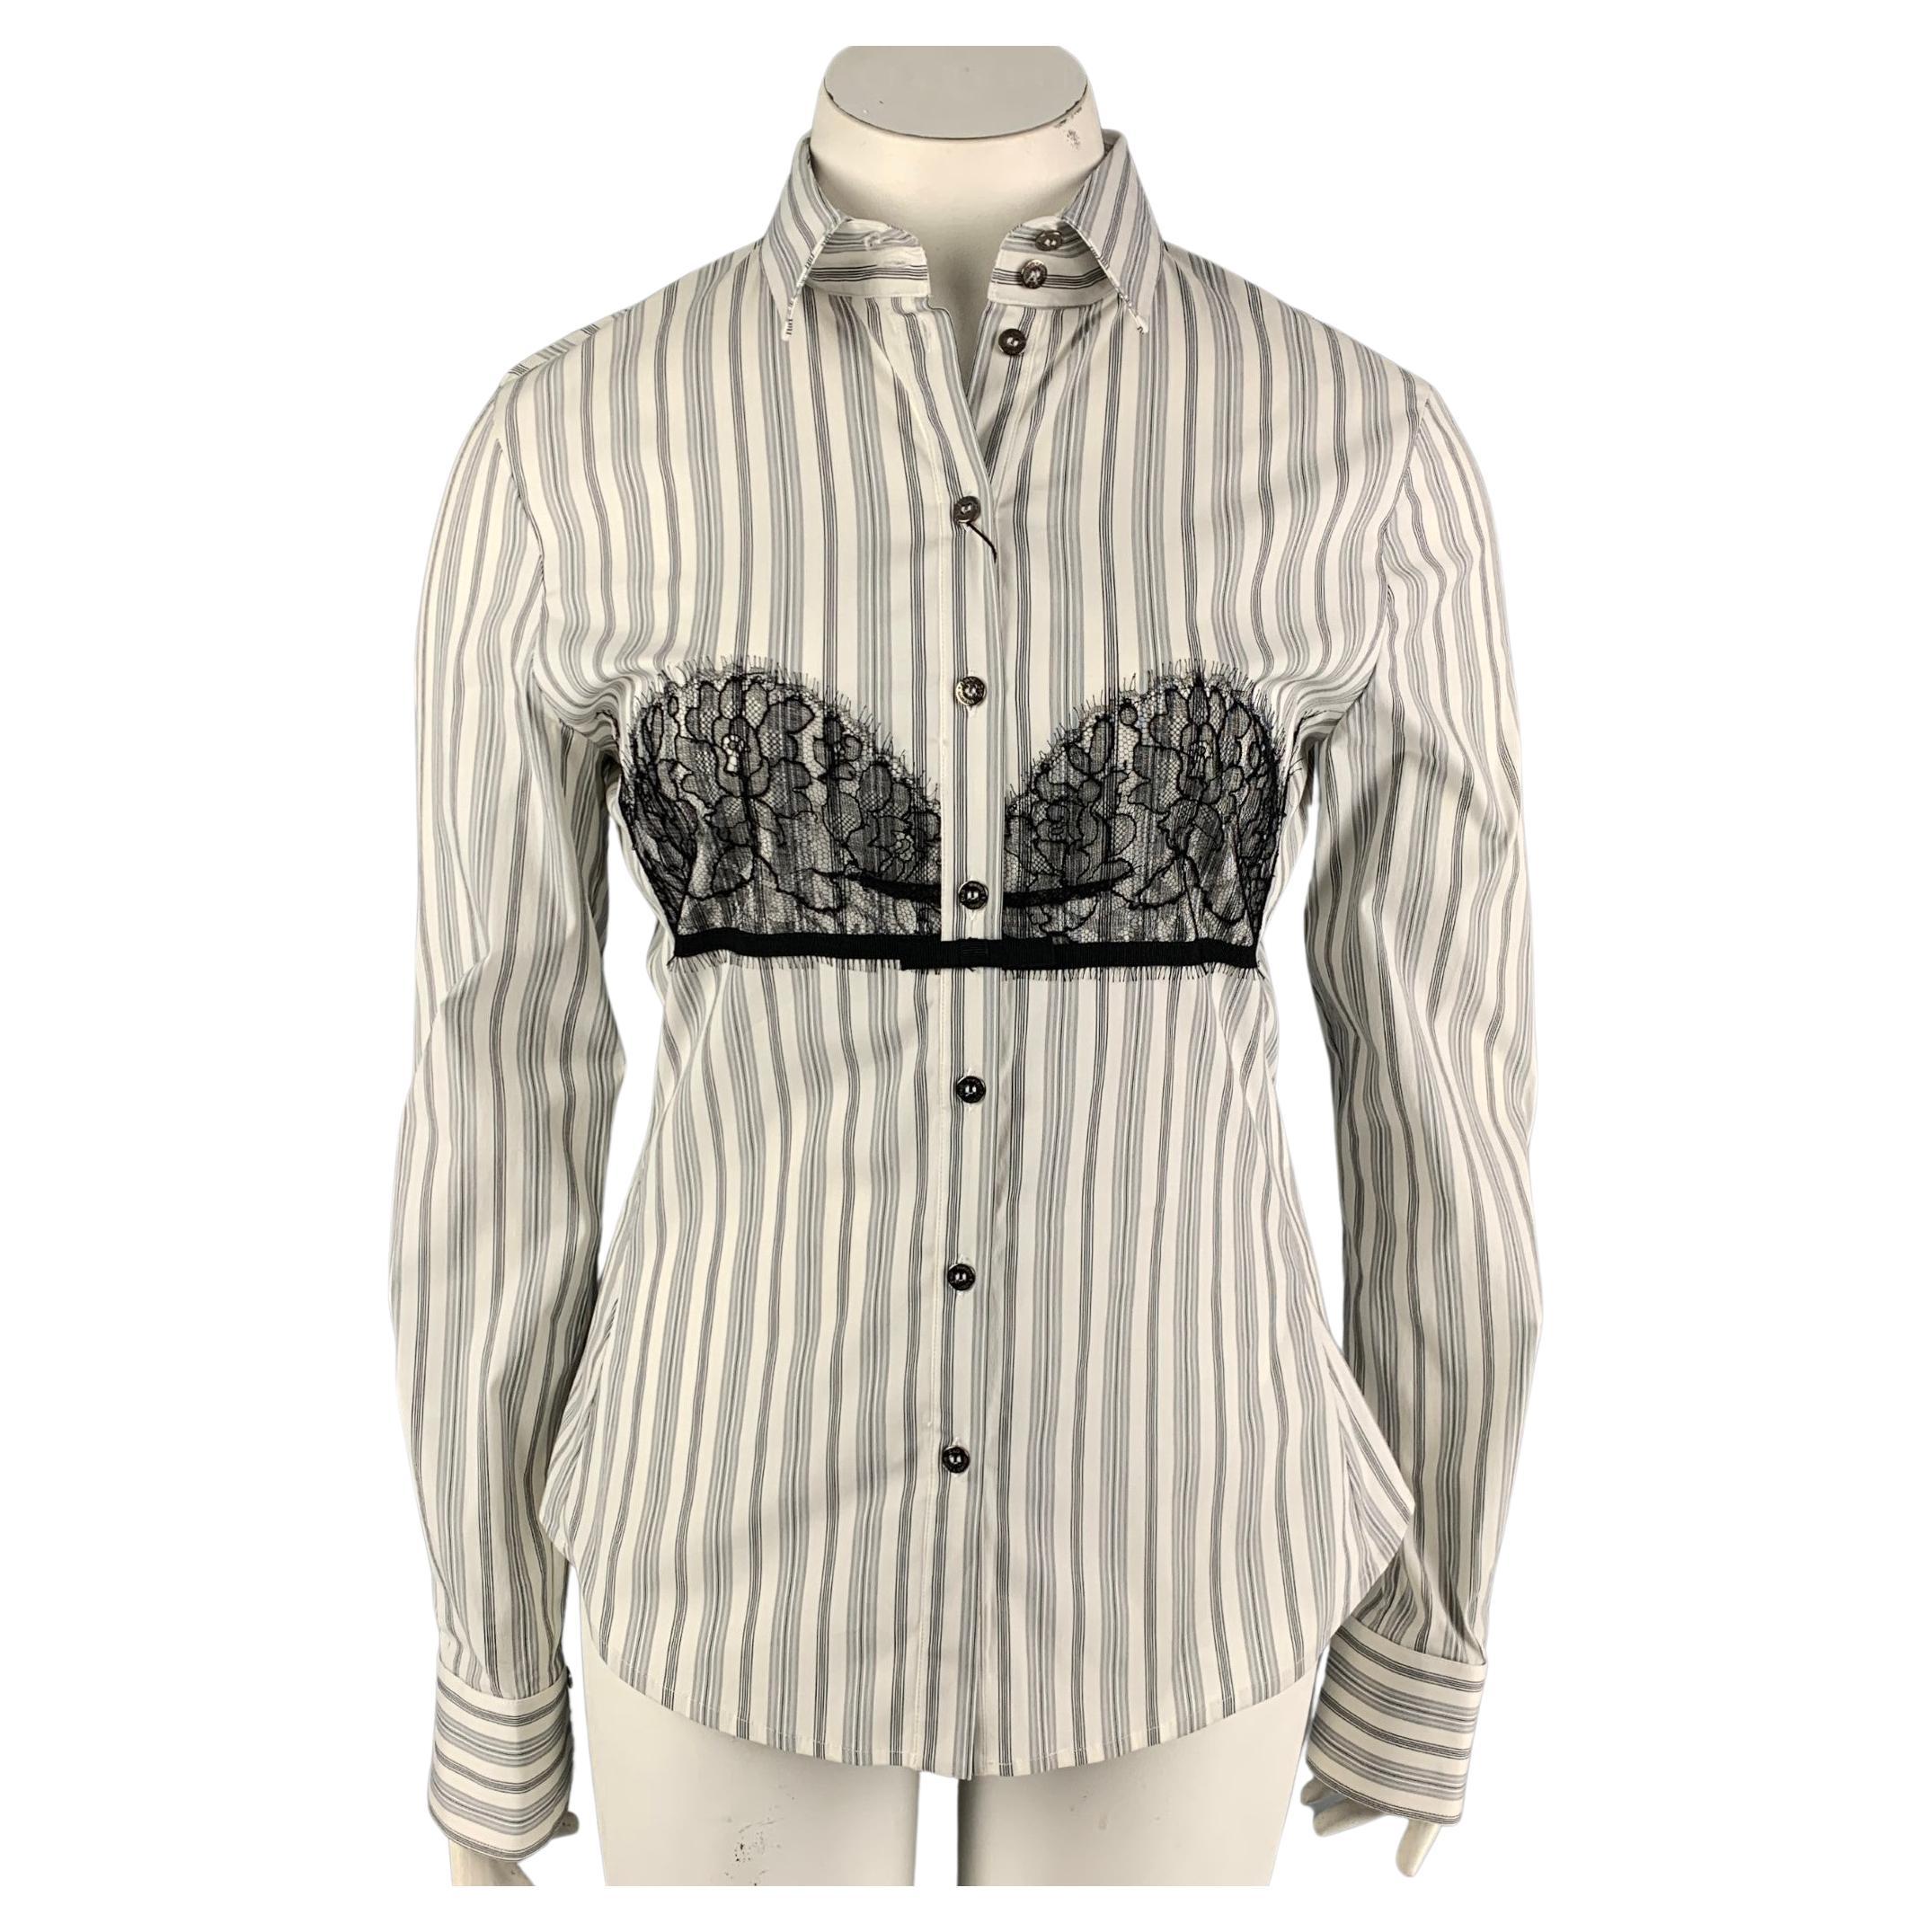 D&G by DOLCE & GABBANA Size 12 White Black Stripe Cotton Blend Button Up Shirt